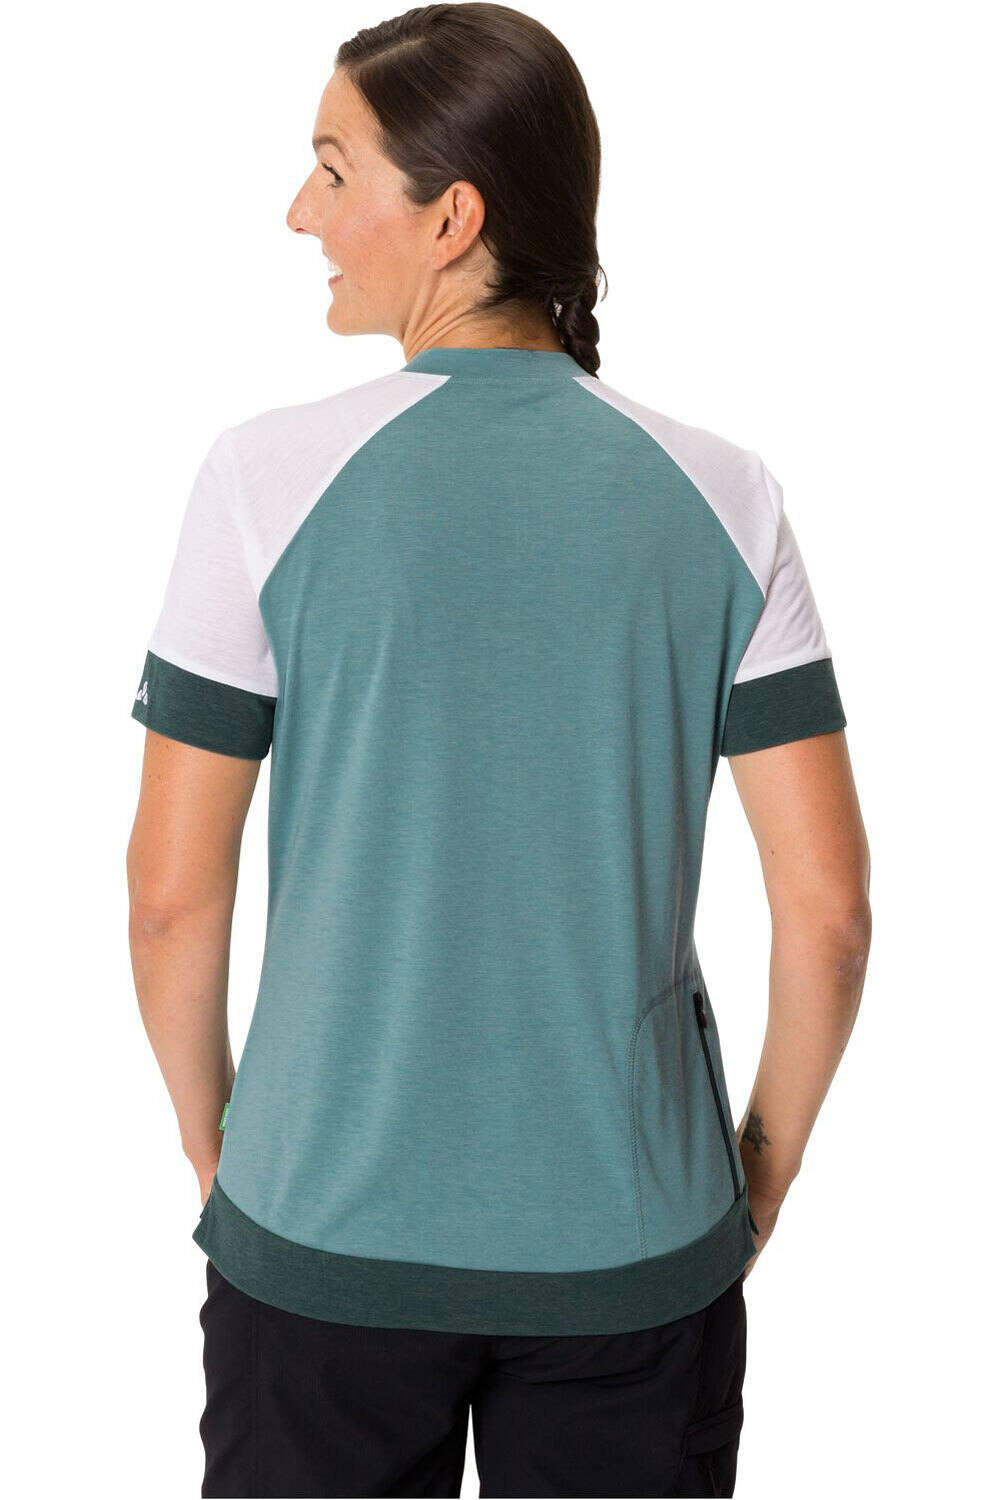 Vaude maillot manga corta mujer Women's Altissimo Q-Zip Shirt vista trasera